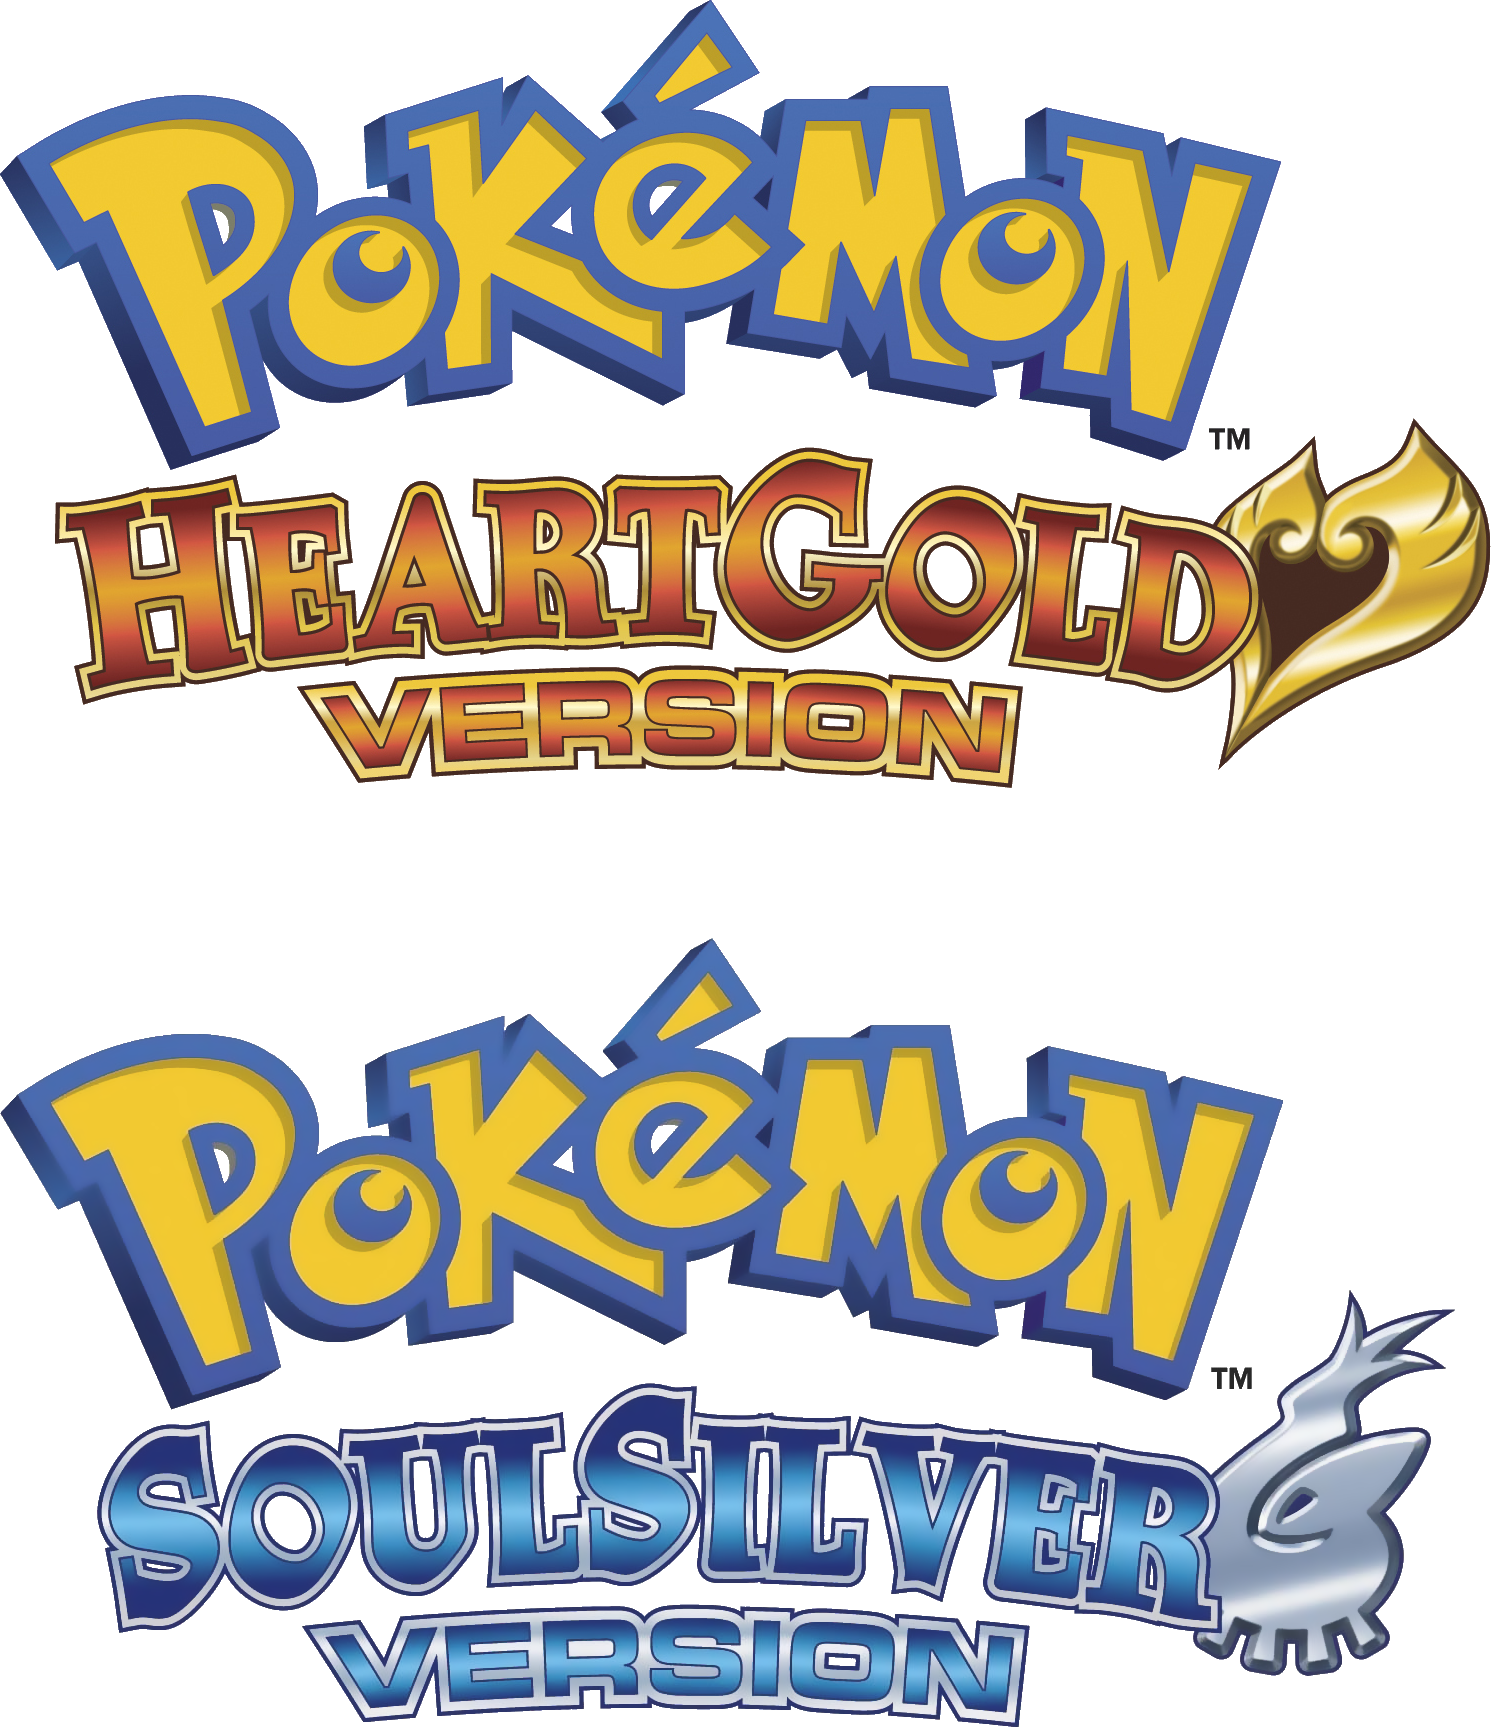 Picture of Pokemon HeartGold & SoulSilver logos